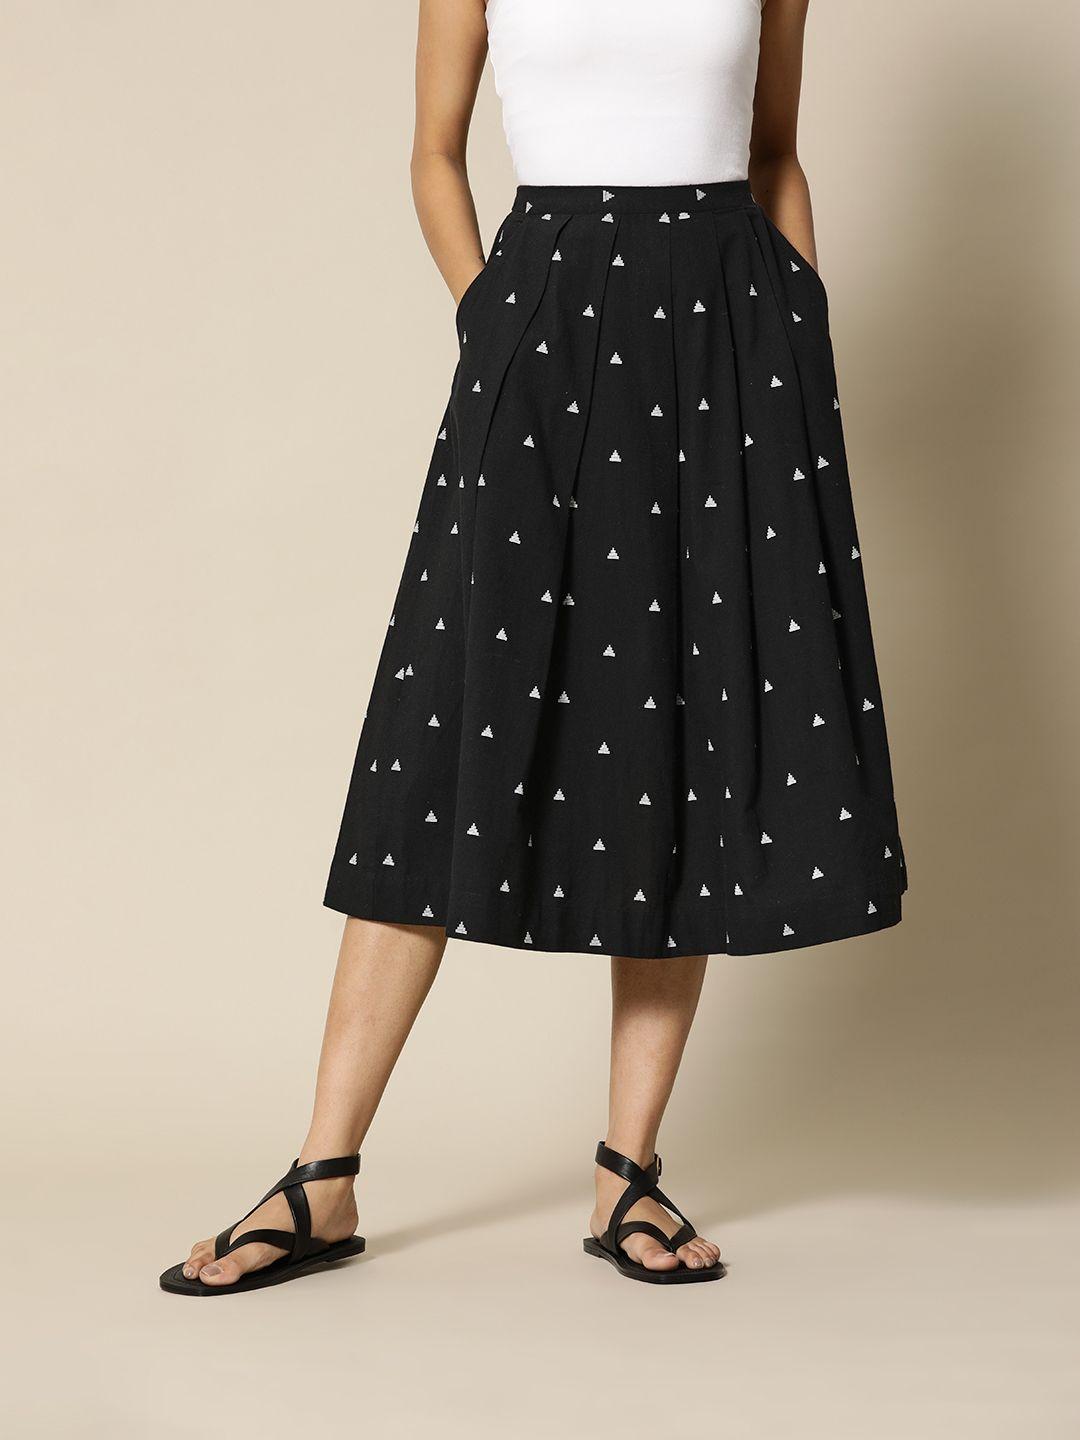 bower women black & white dobby premium cotton elasticated pleated skirt with pockets